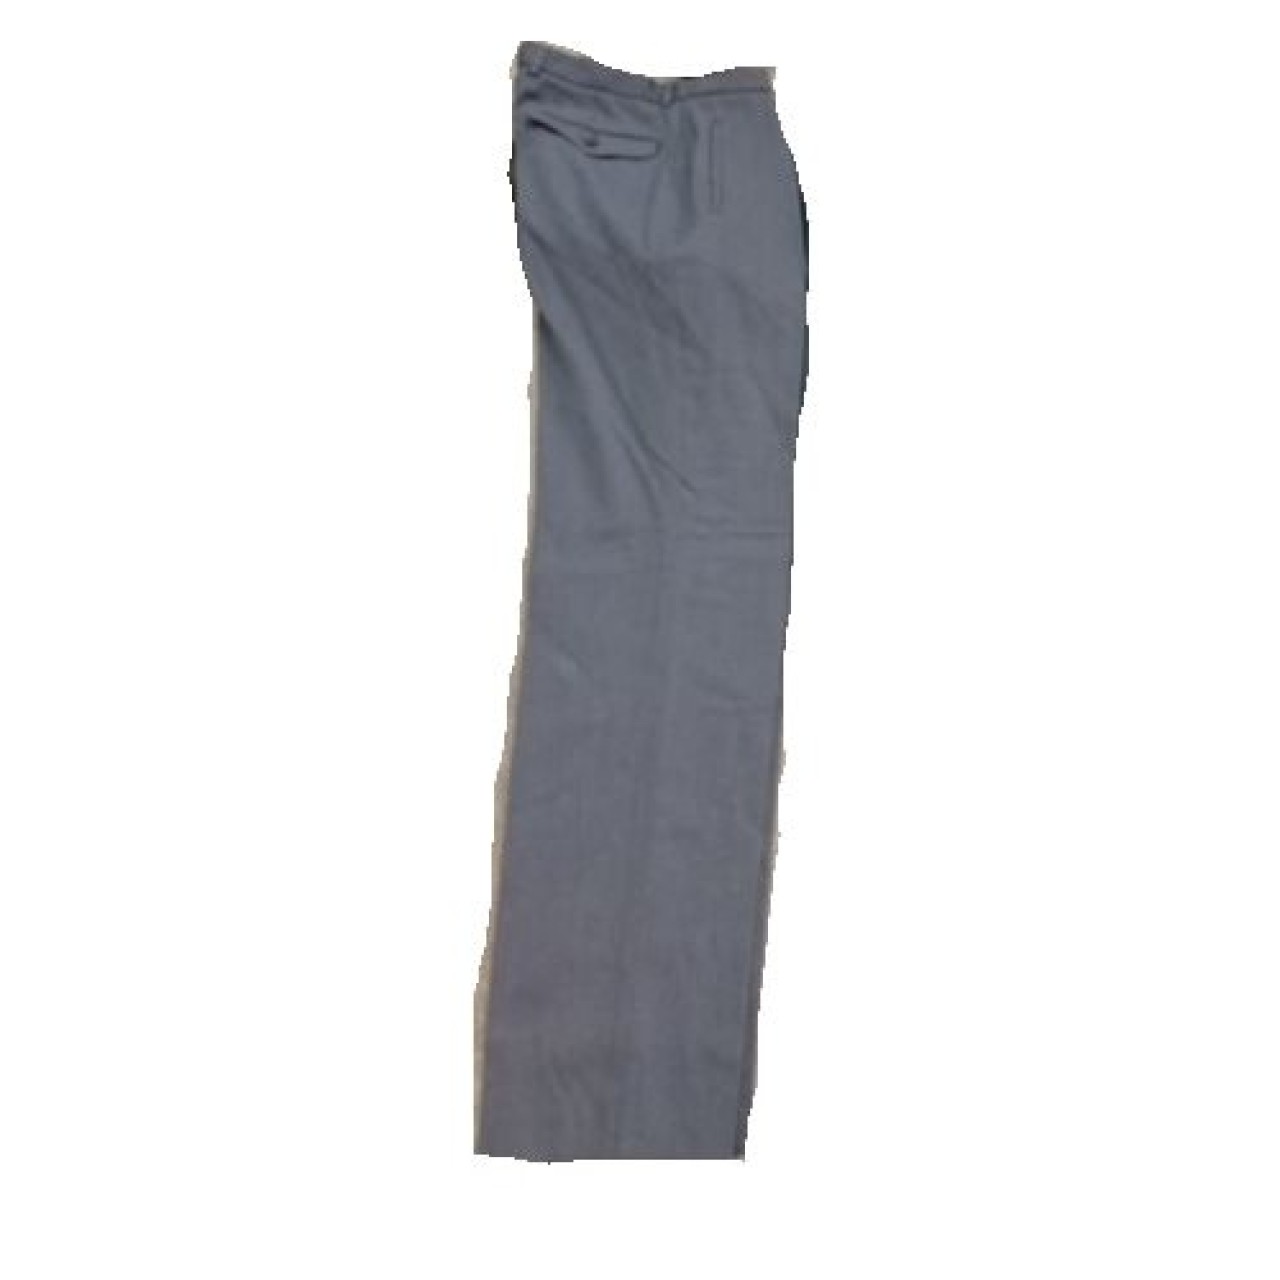 Nohavice vychádzkové sivé